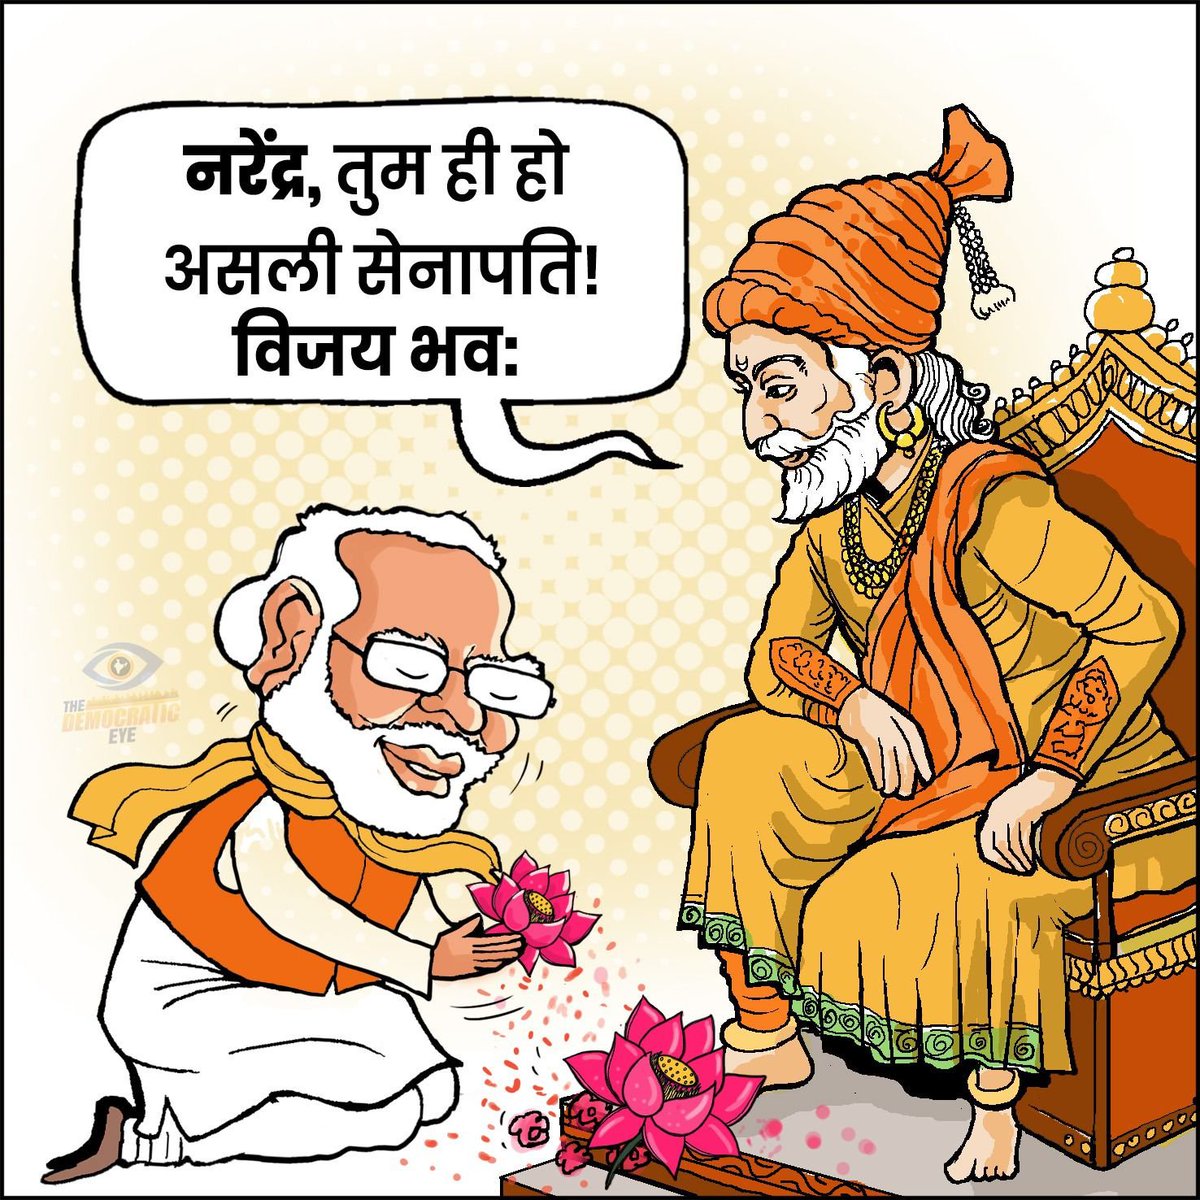 Congress has insulted Chhatrapati Shivaji Maharaj. The nation will reject Pappu and choose PM Modi who follows the path of Maharaj 👑